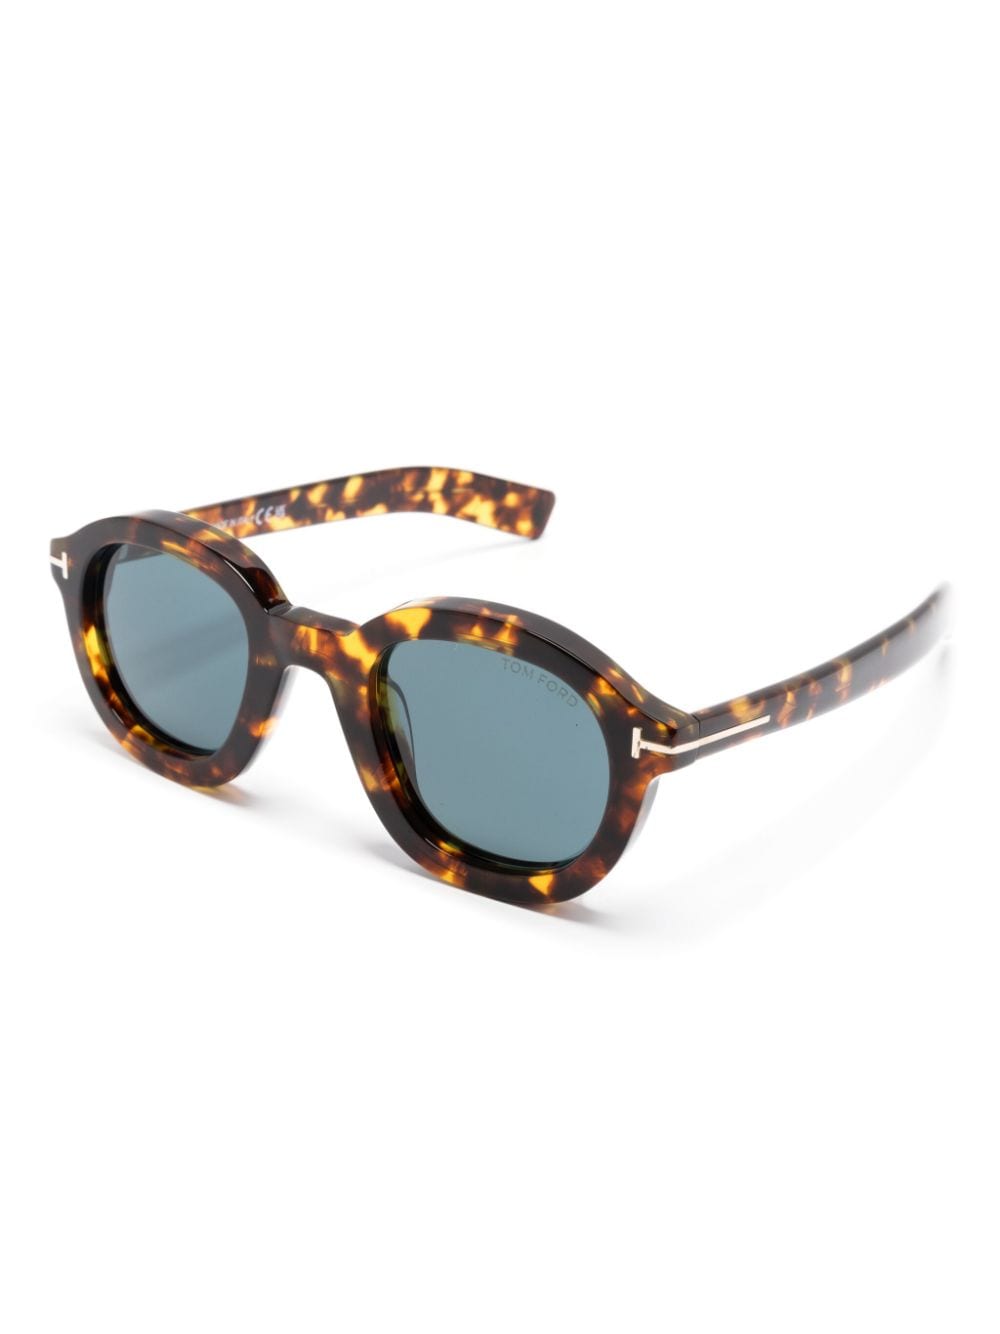 TOM FORD Eyewear Raffa pantos-frame sunglasses - Bruin